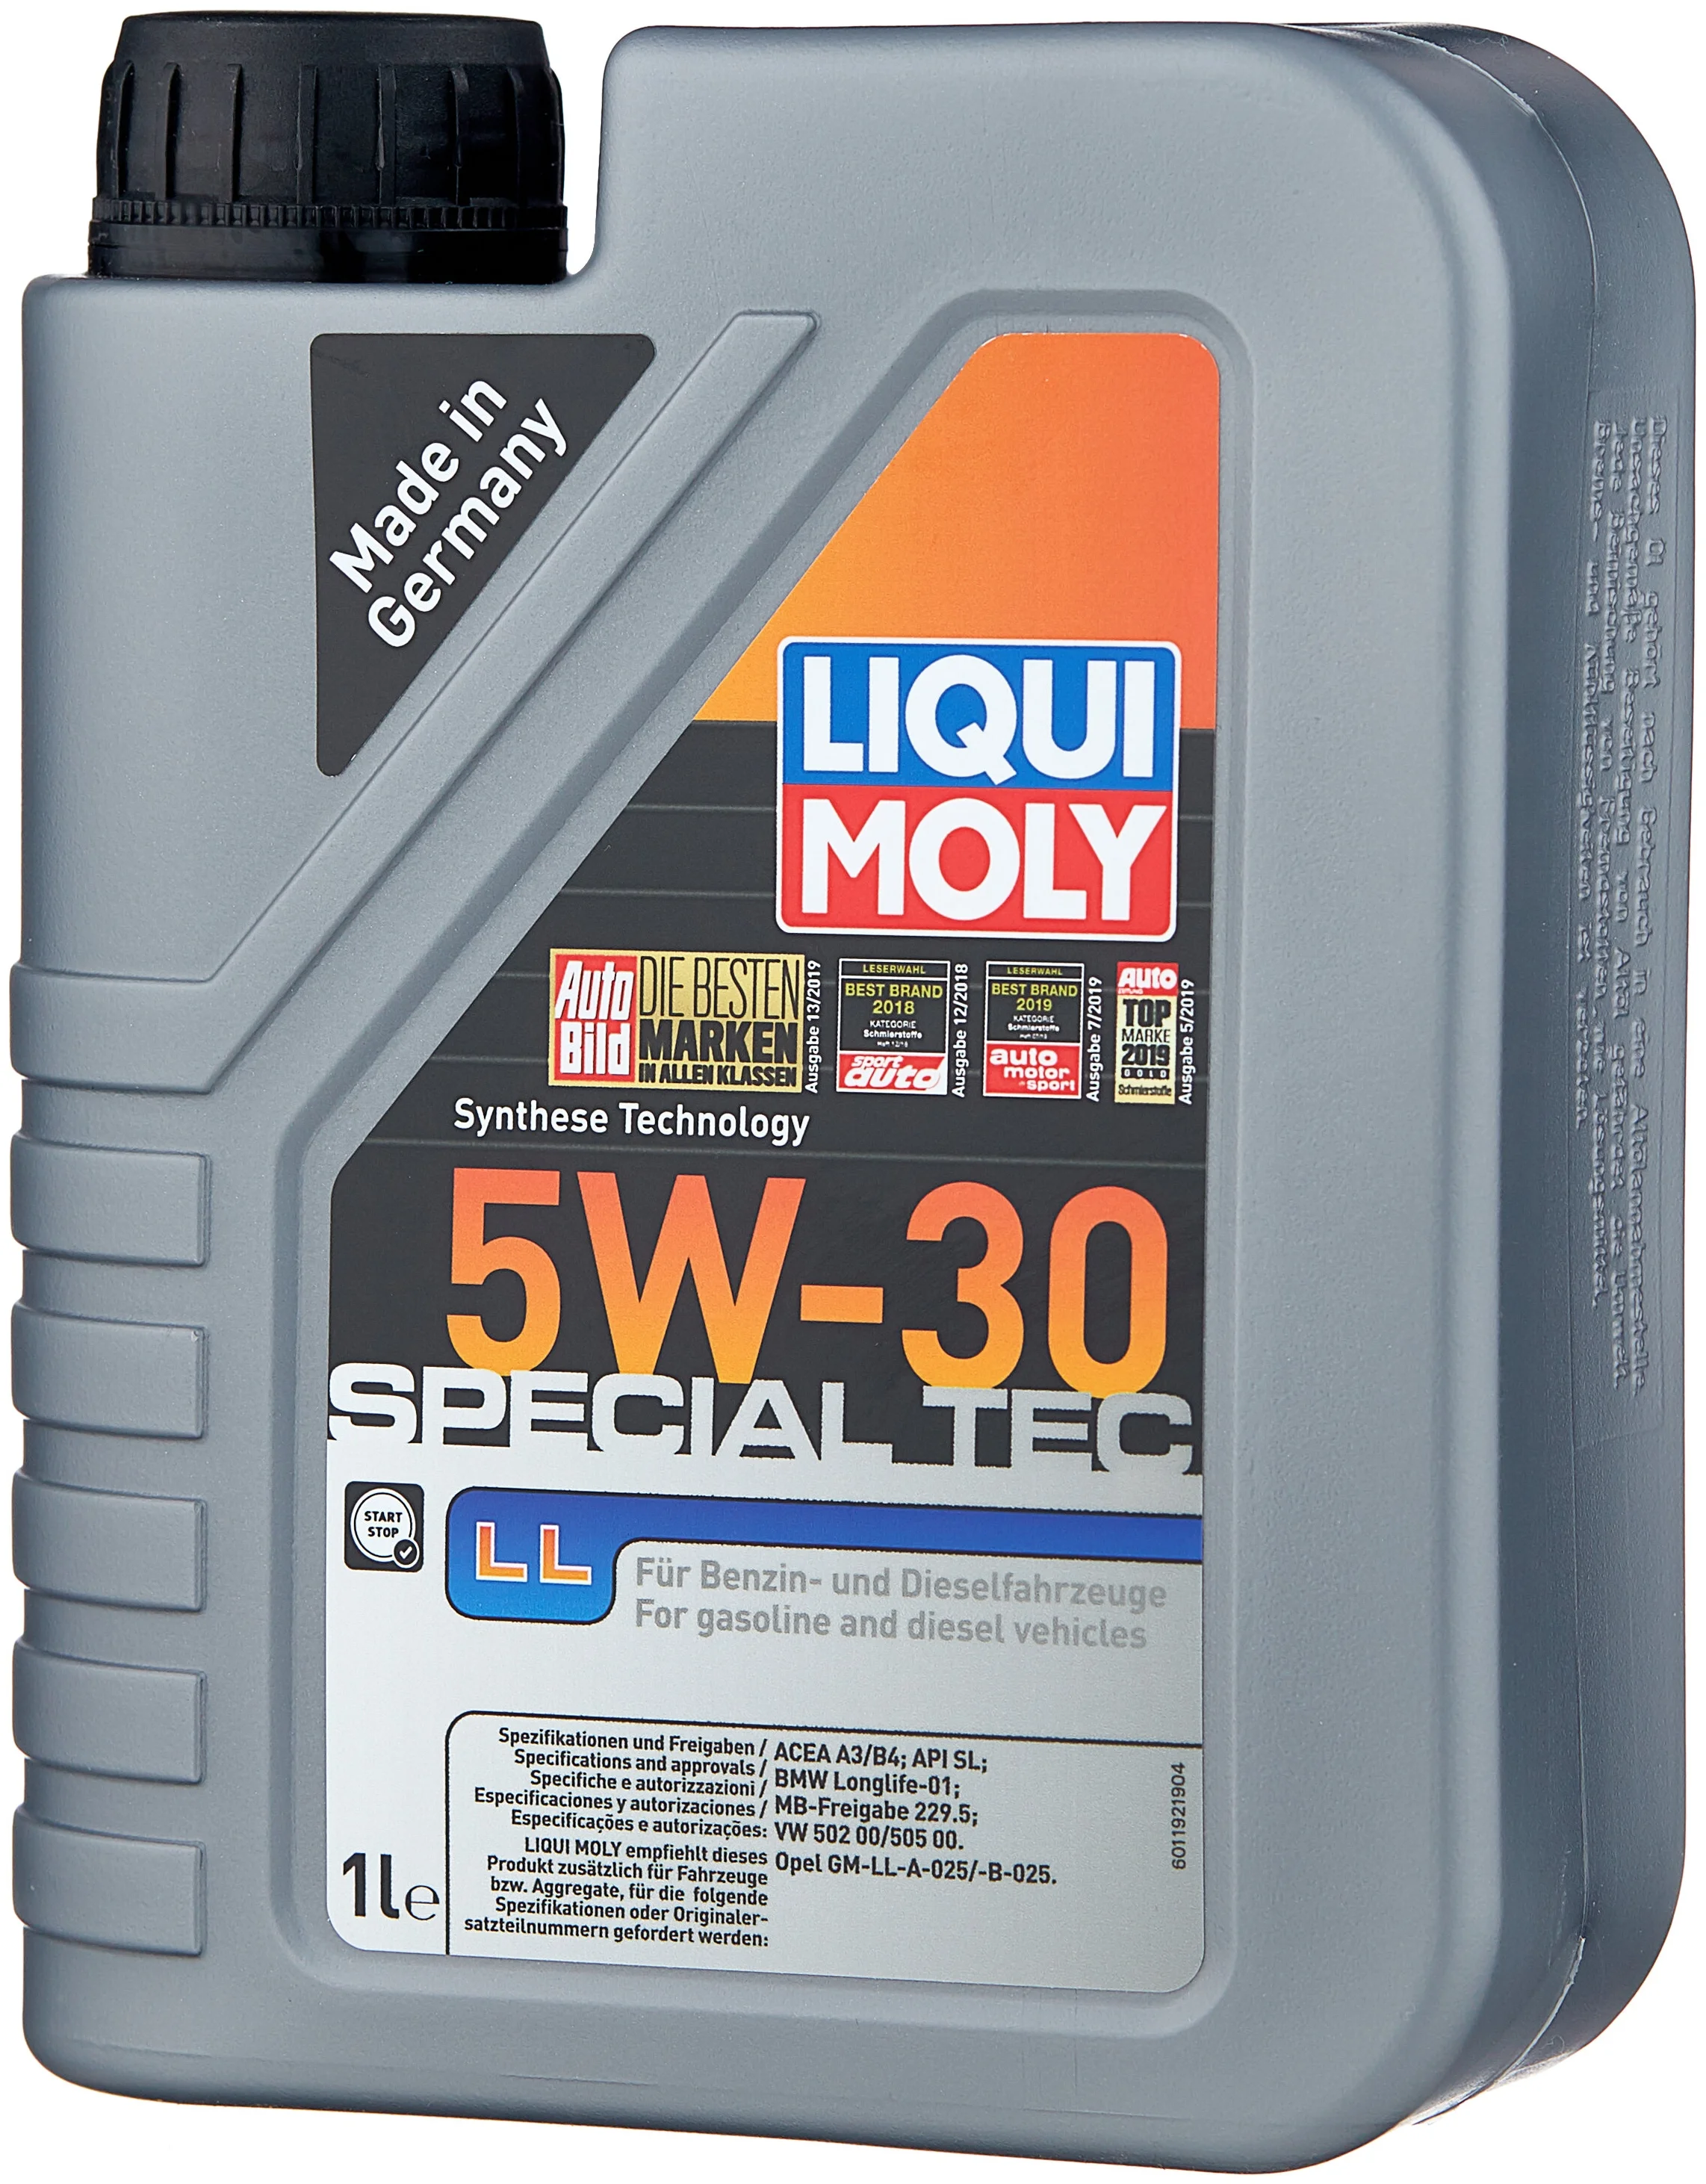 LIQUI MOLY Special Tec LL 5W-30 - класс вязкости: 5W-30